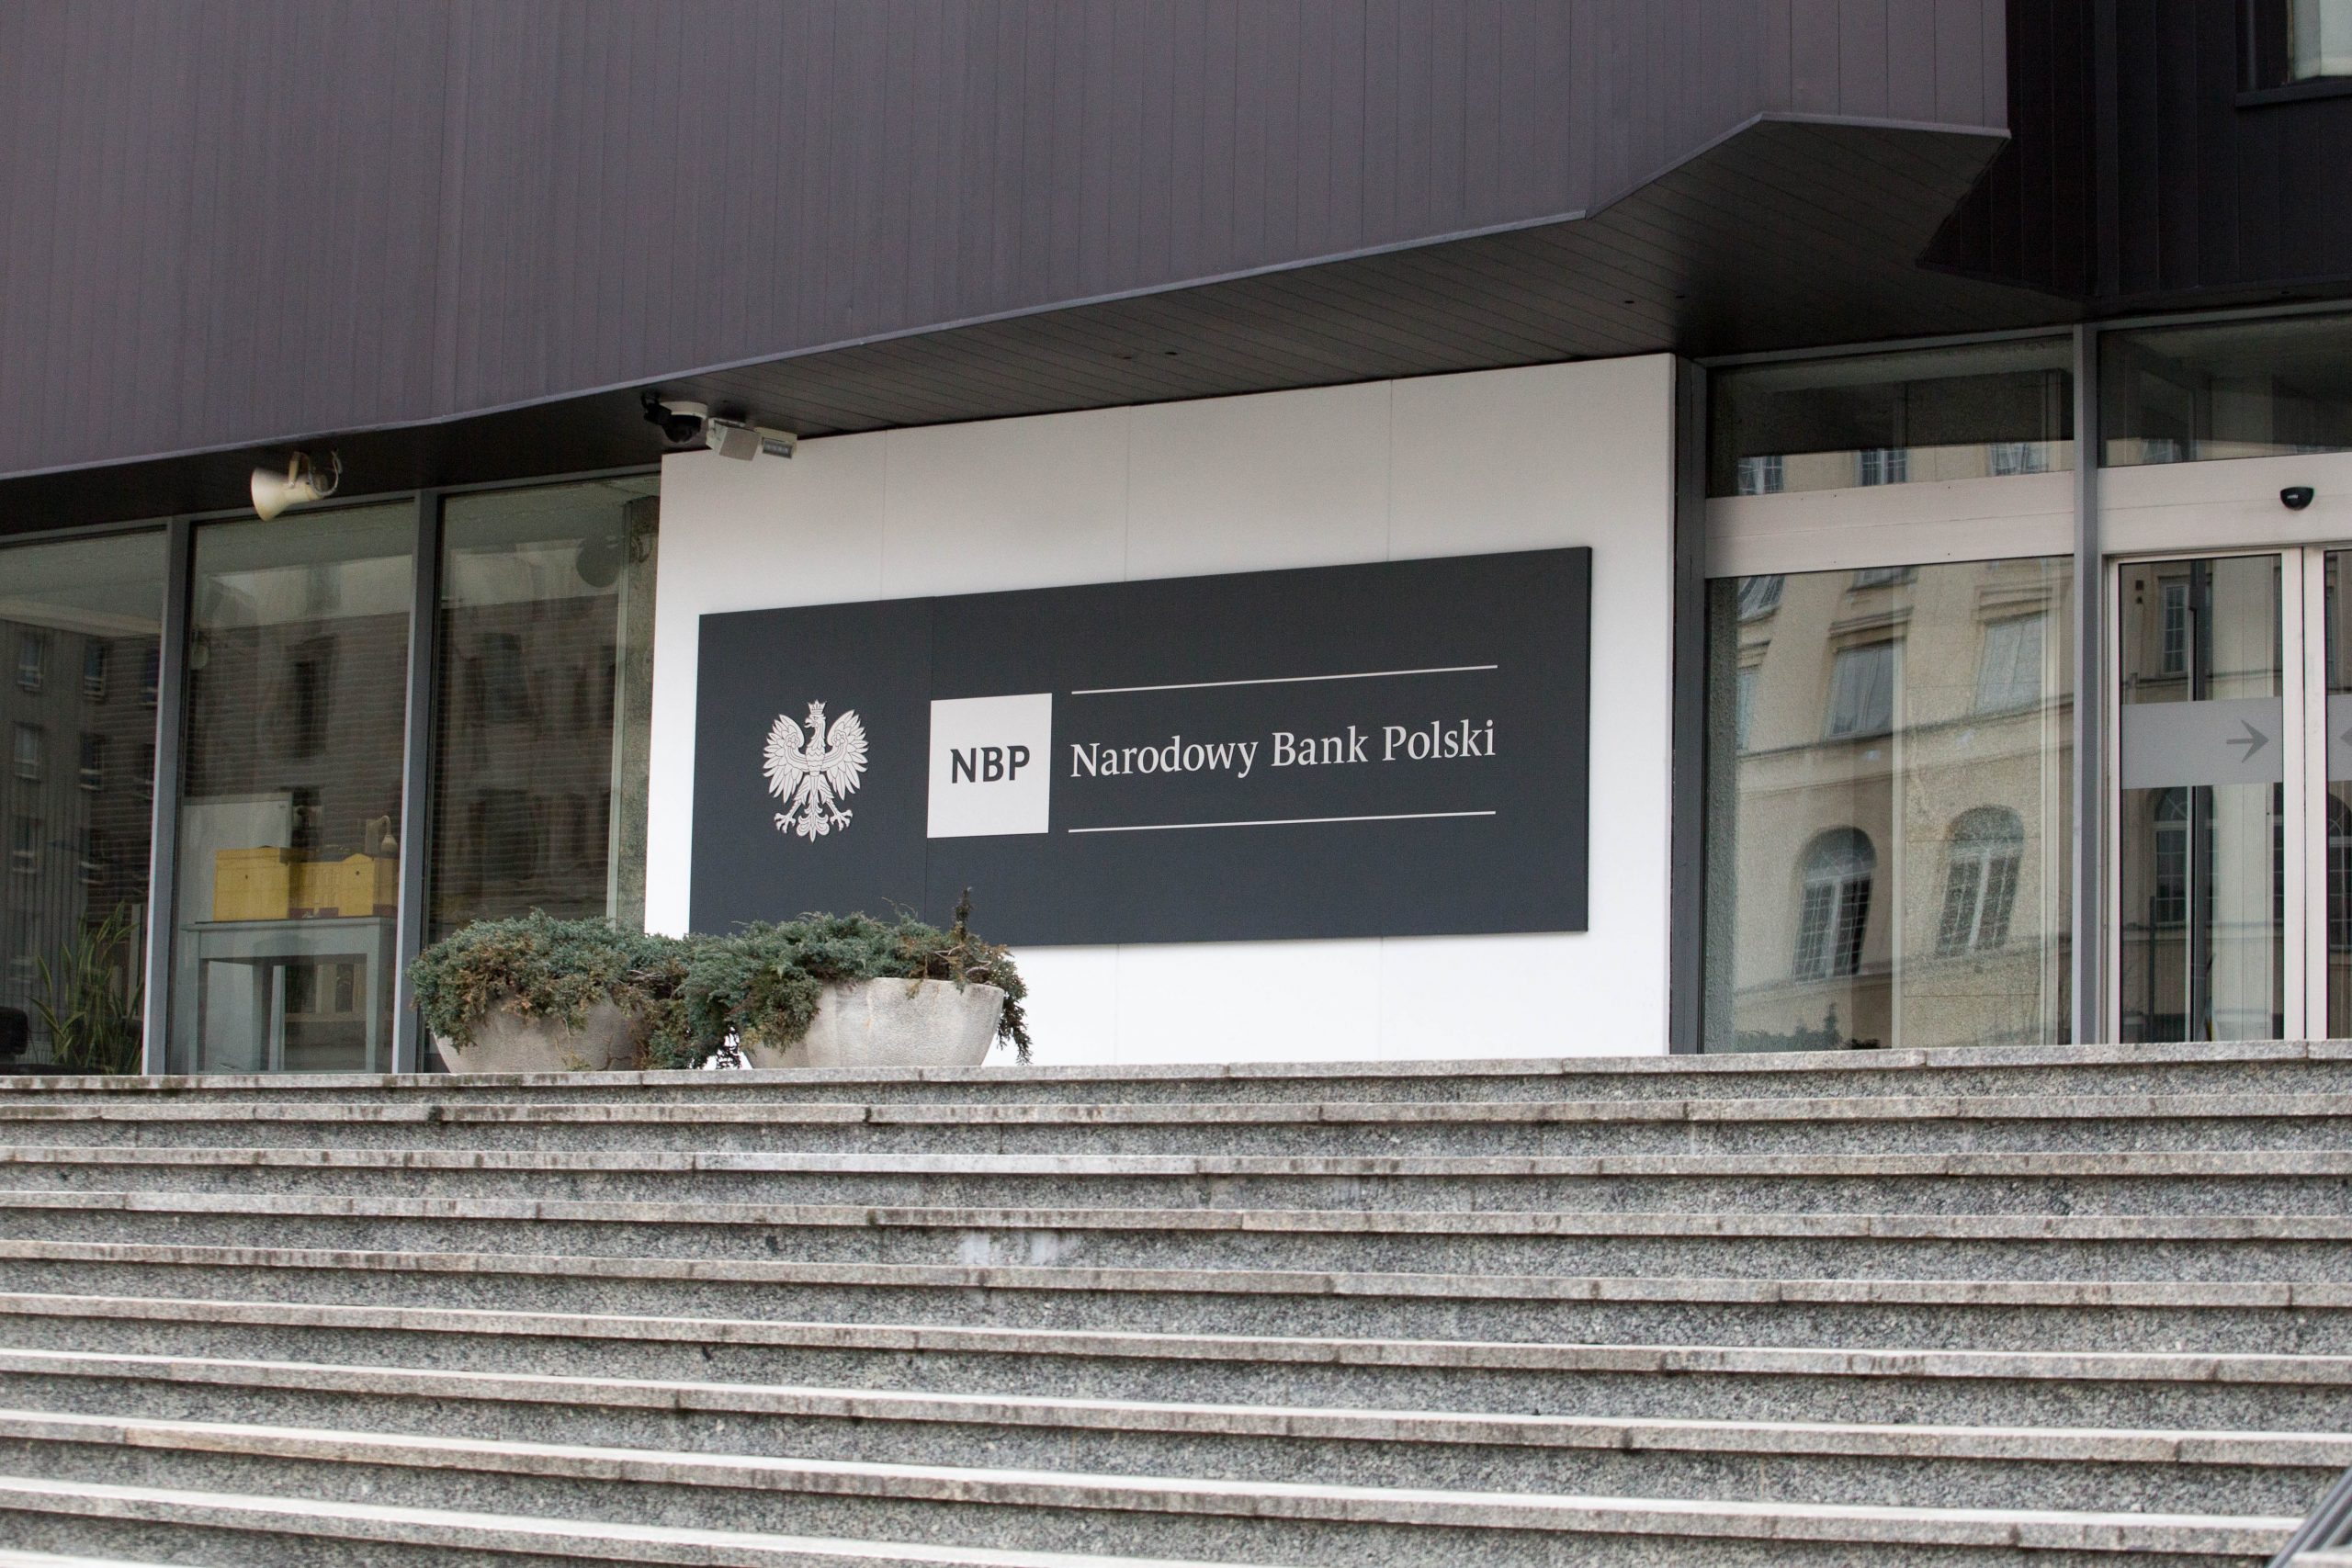 Siedziba NBP w Warszawie, fot. Pawel Bednarz / Shutterstock.com